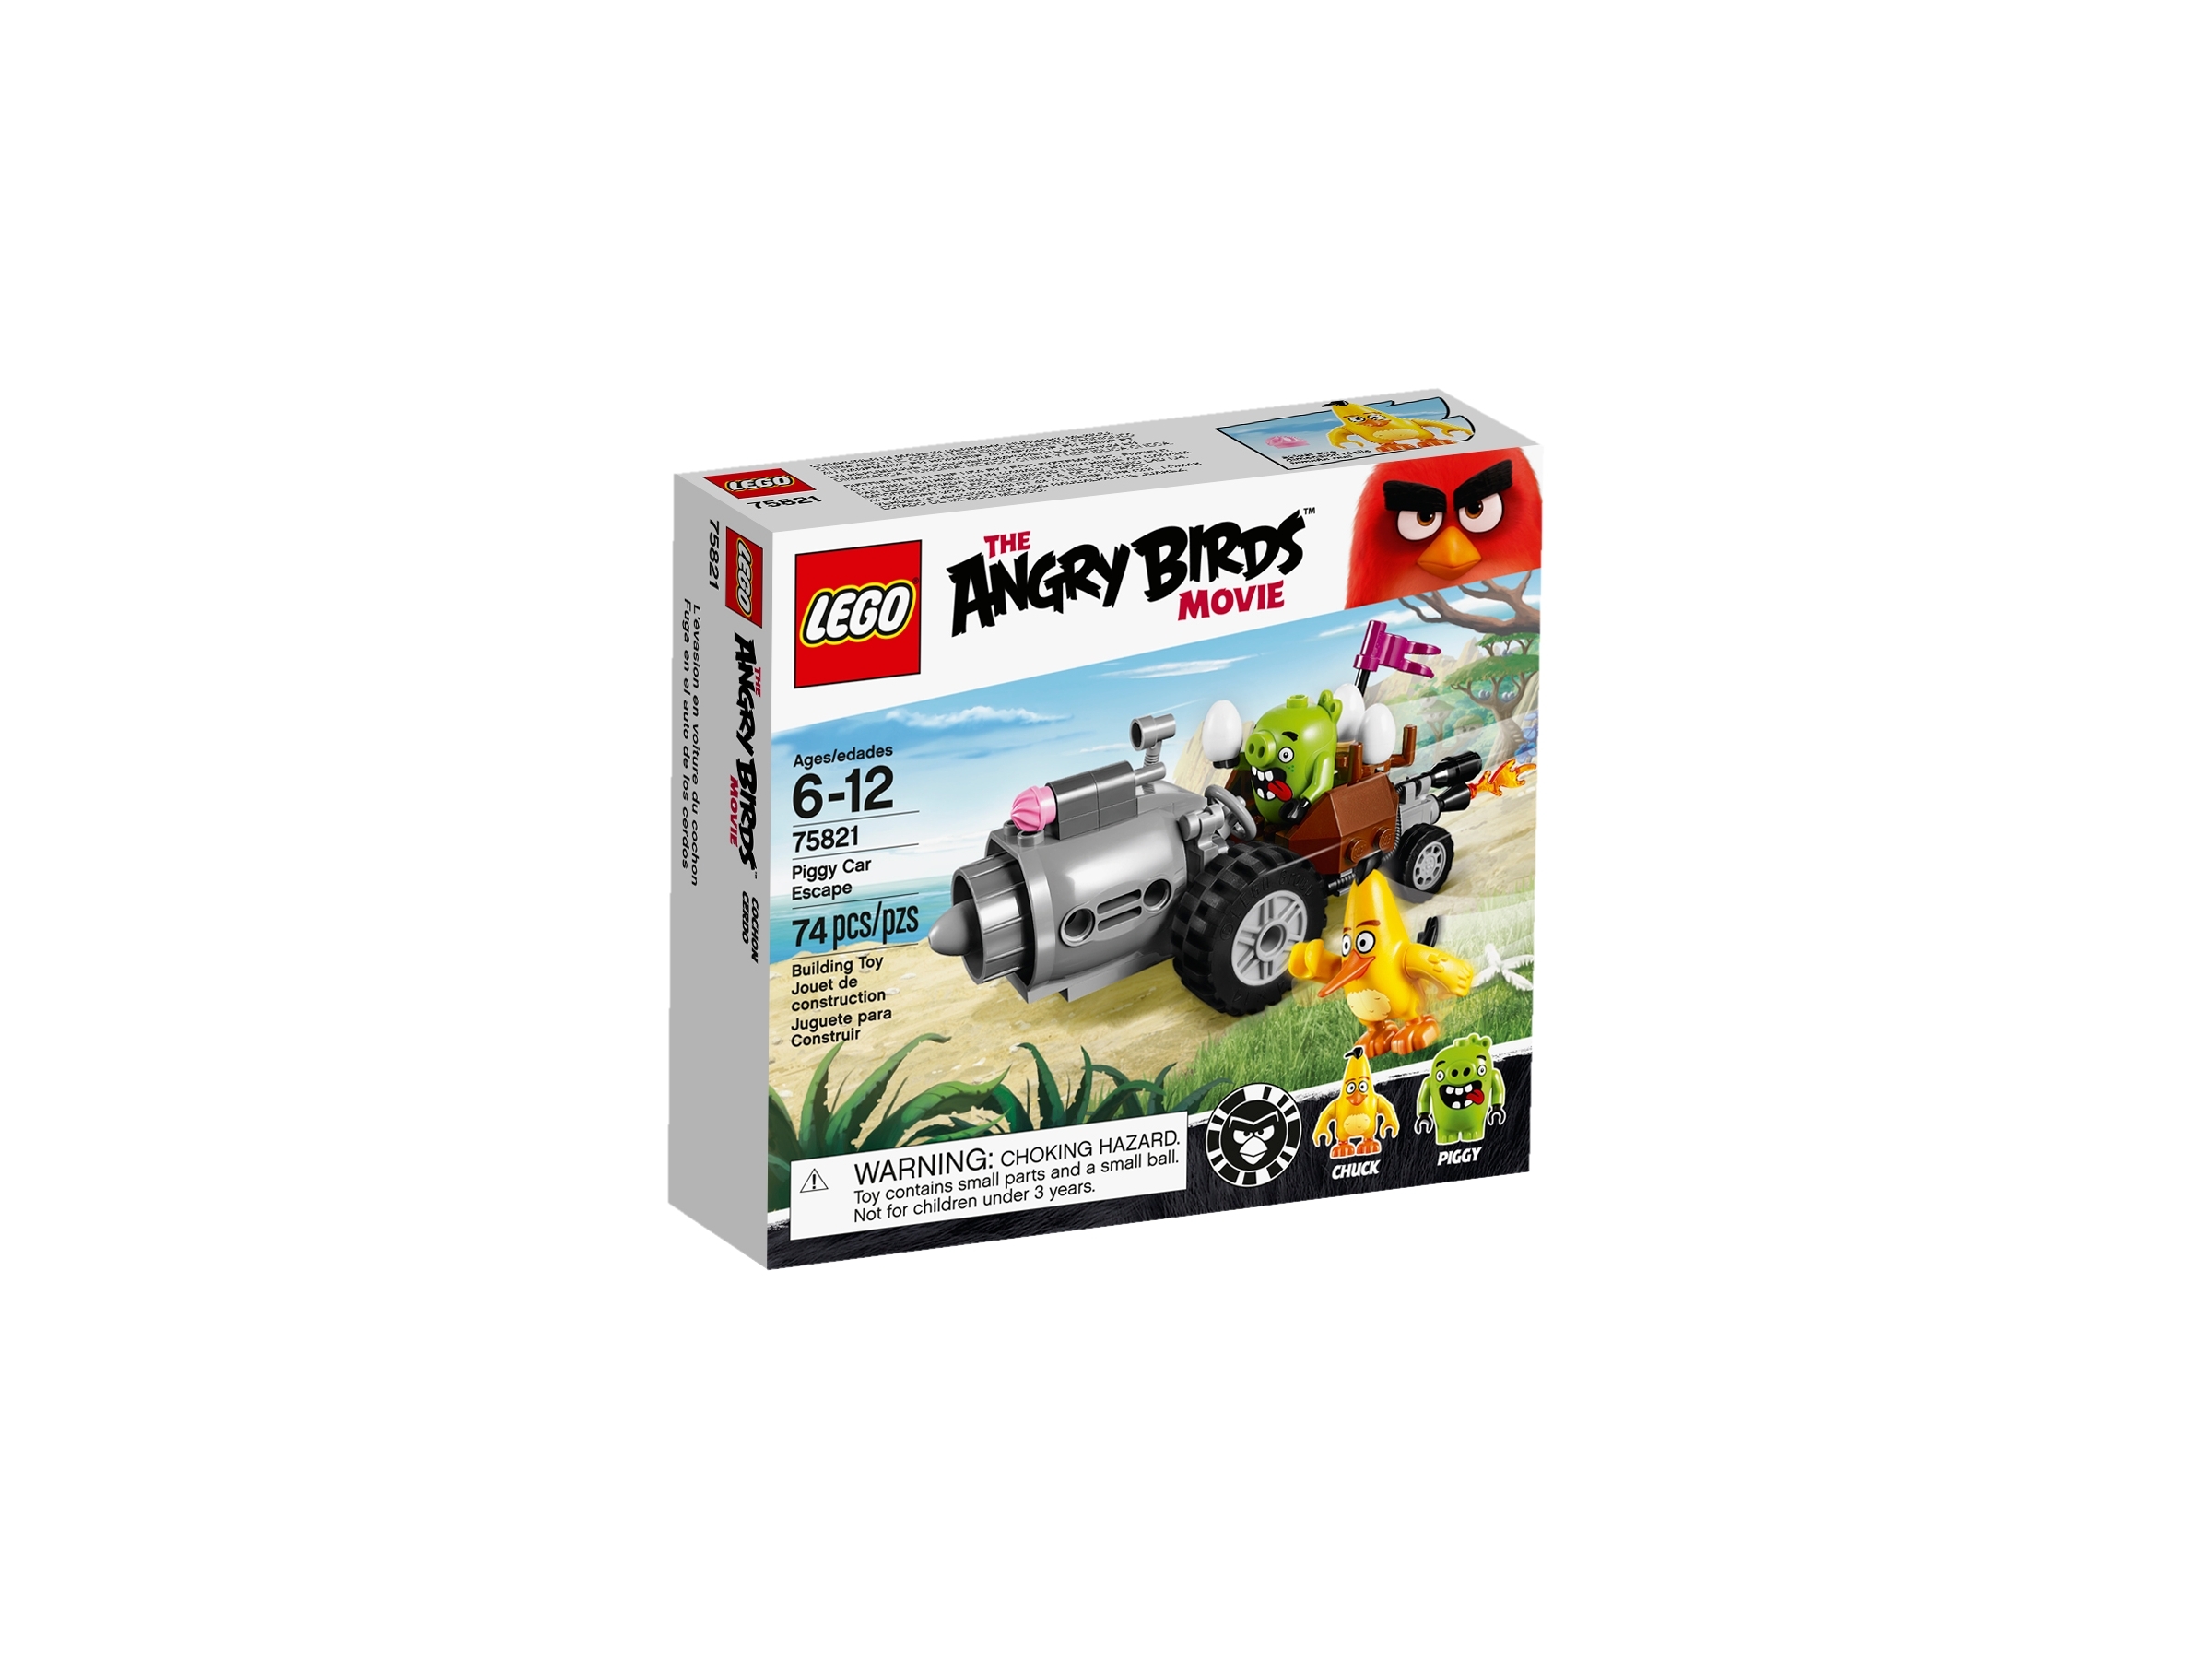 NOUVEAU & NEUF dans sa boîte LEGO ® Angry Birds ™ 75821 Piggy car Escape NOUVEAU & NEUF dans sa boîte Chuck 